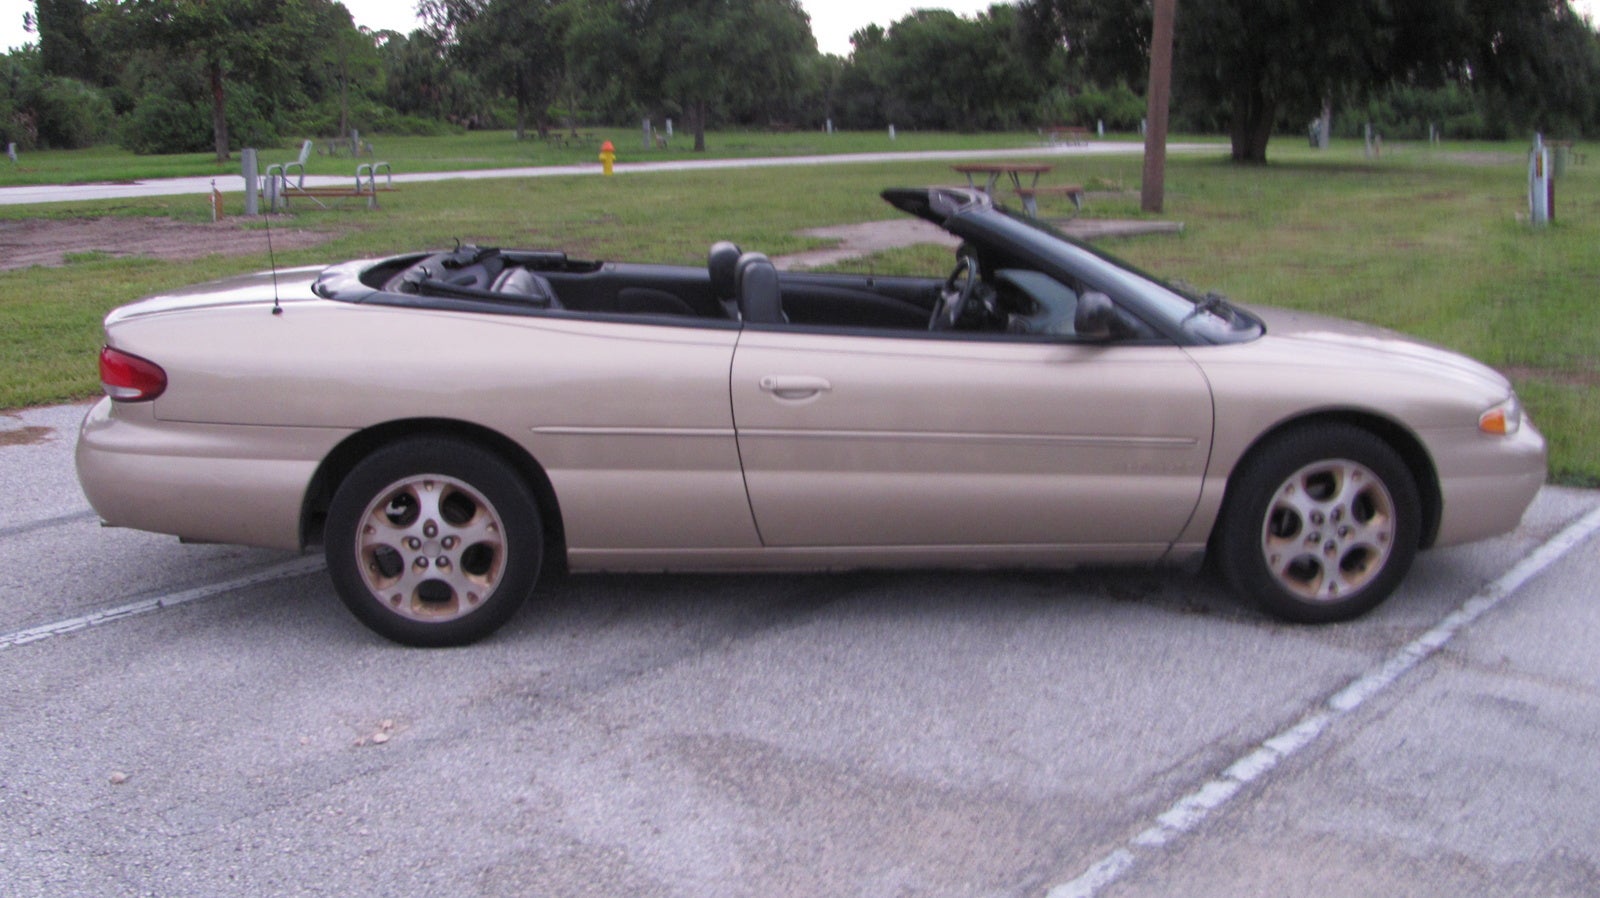 2000 Chrysler sebring convertible limited edition #1